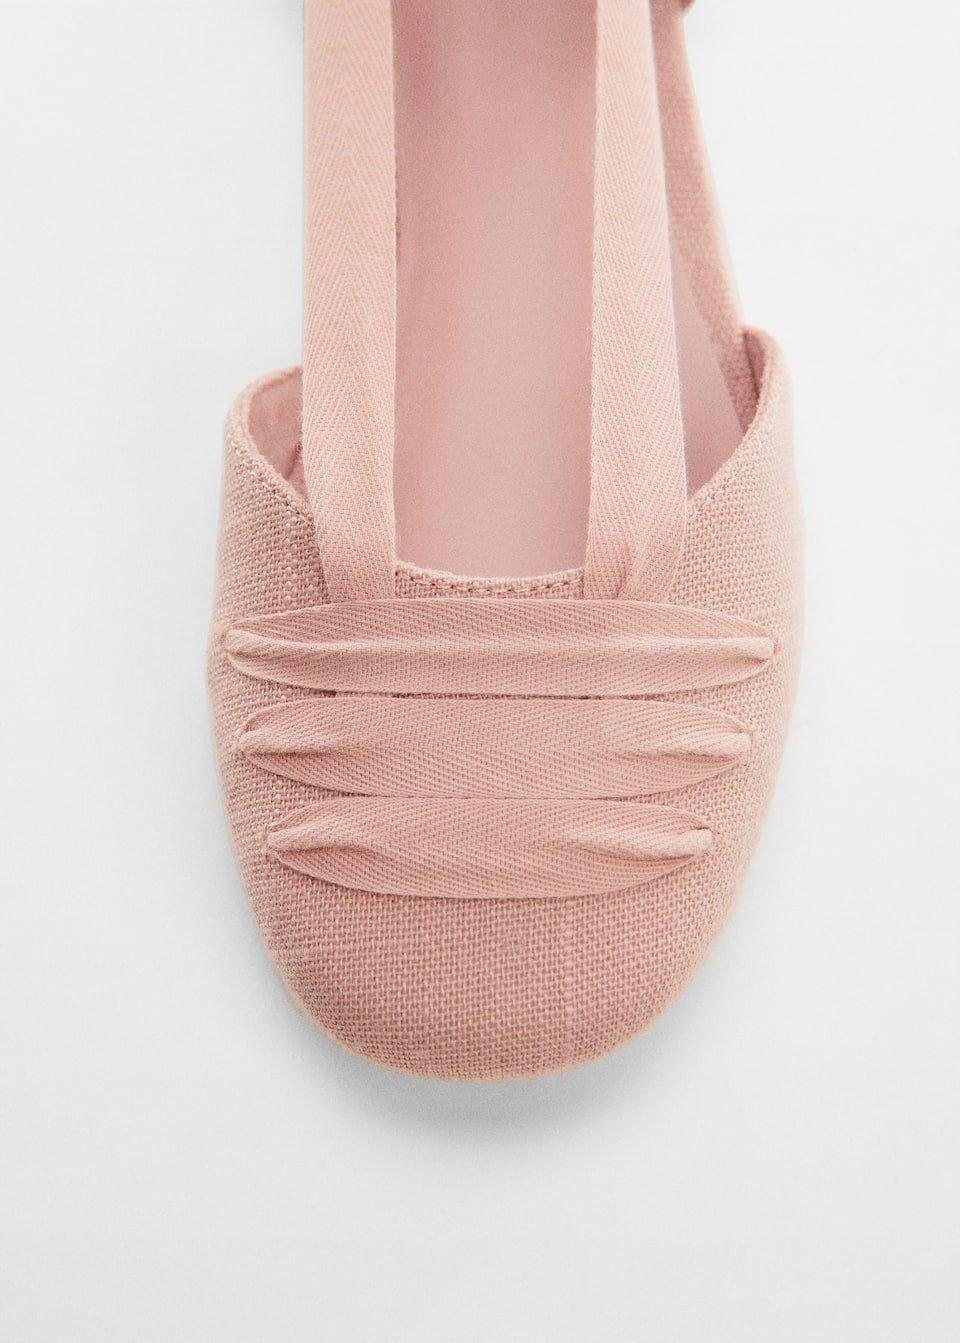 Mango - Pink Flat Strips Shoes, Kids Girls